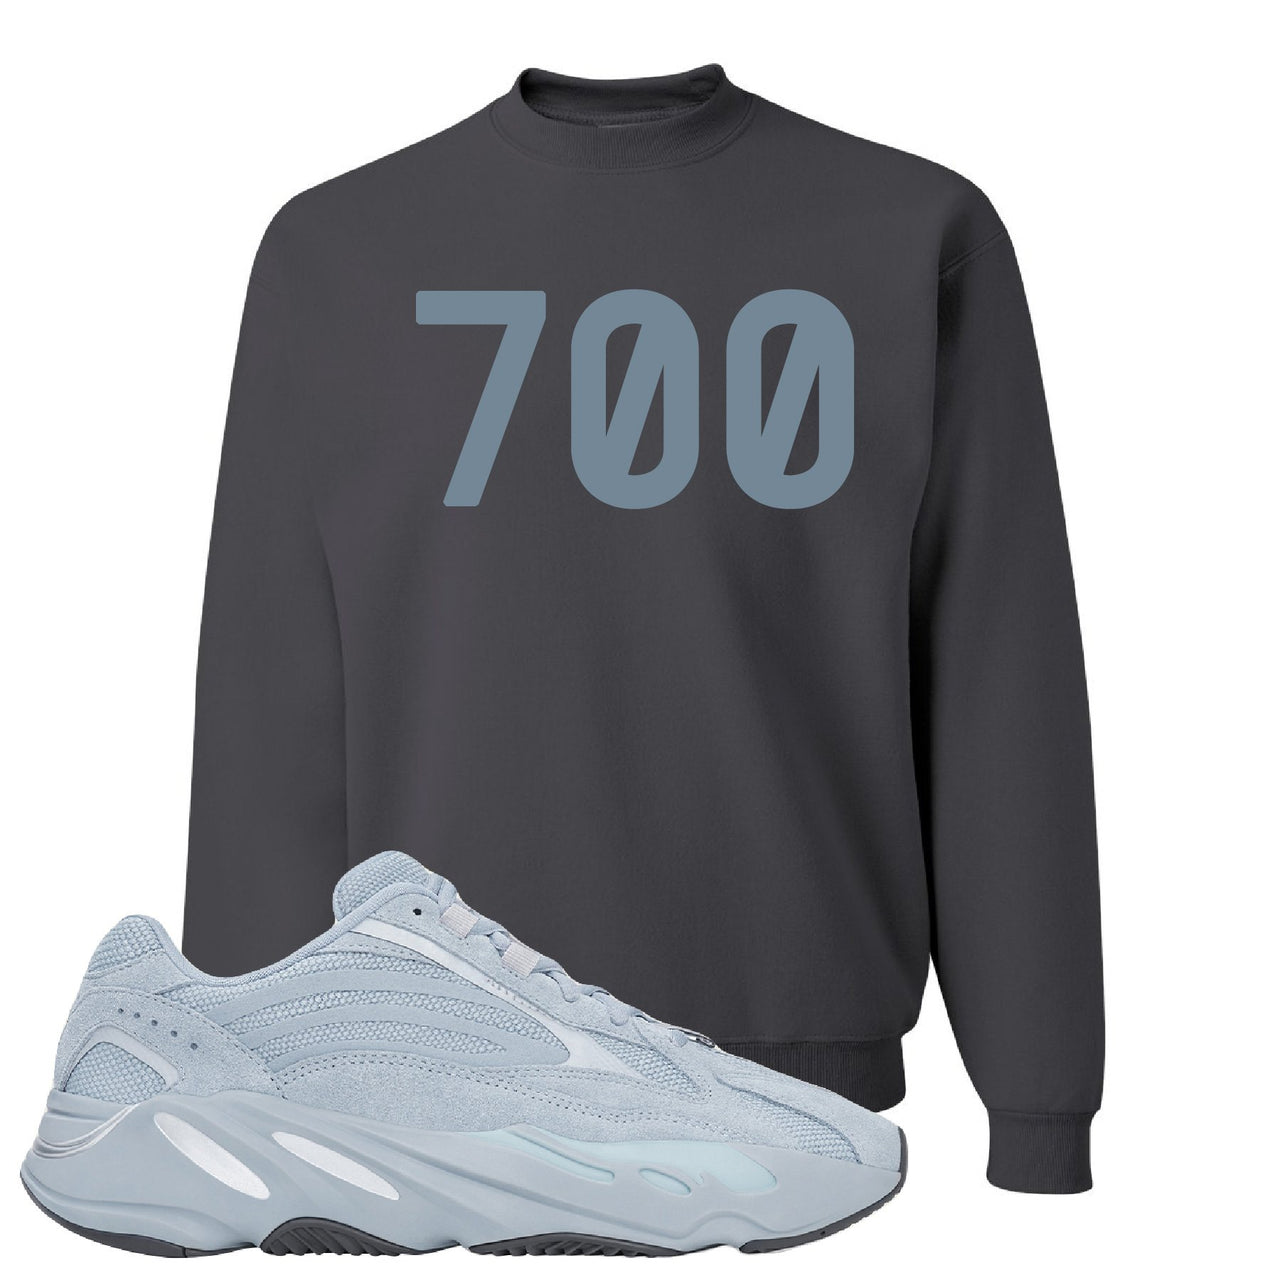 Yeezy Boost 700 V2 Hospital Blue 700 Sneaker Matching Charcoal Grey Crewneck Sweatshirt